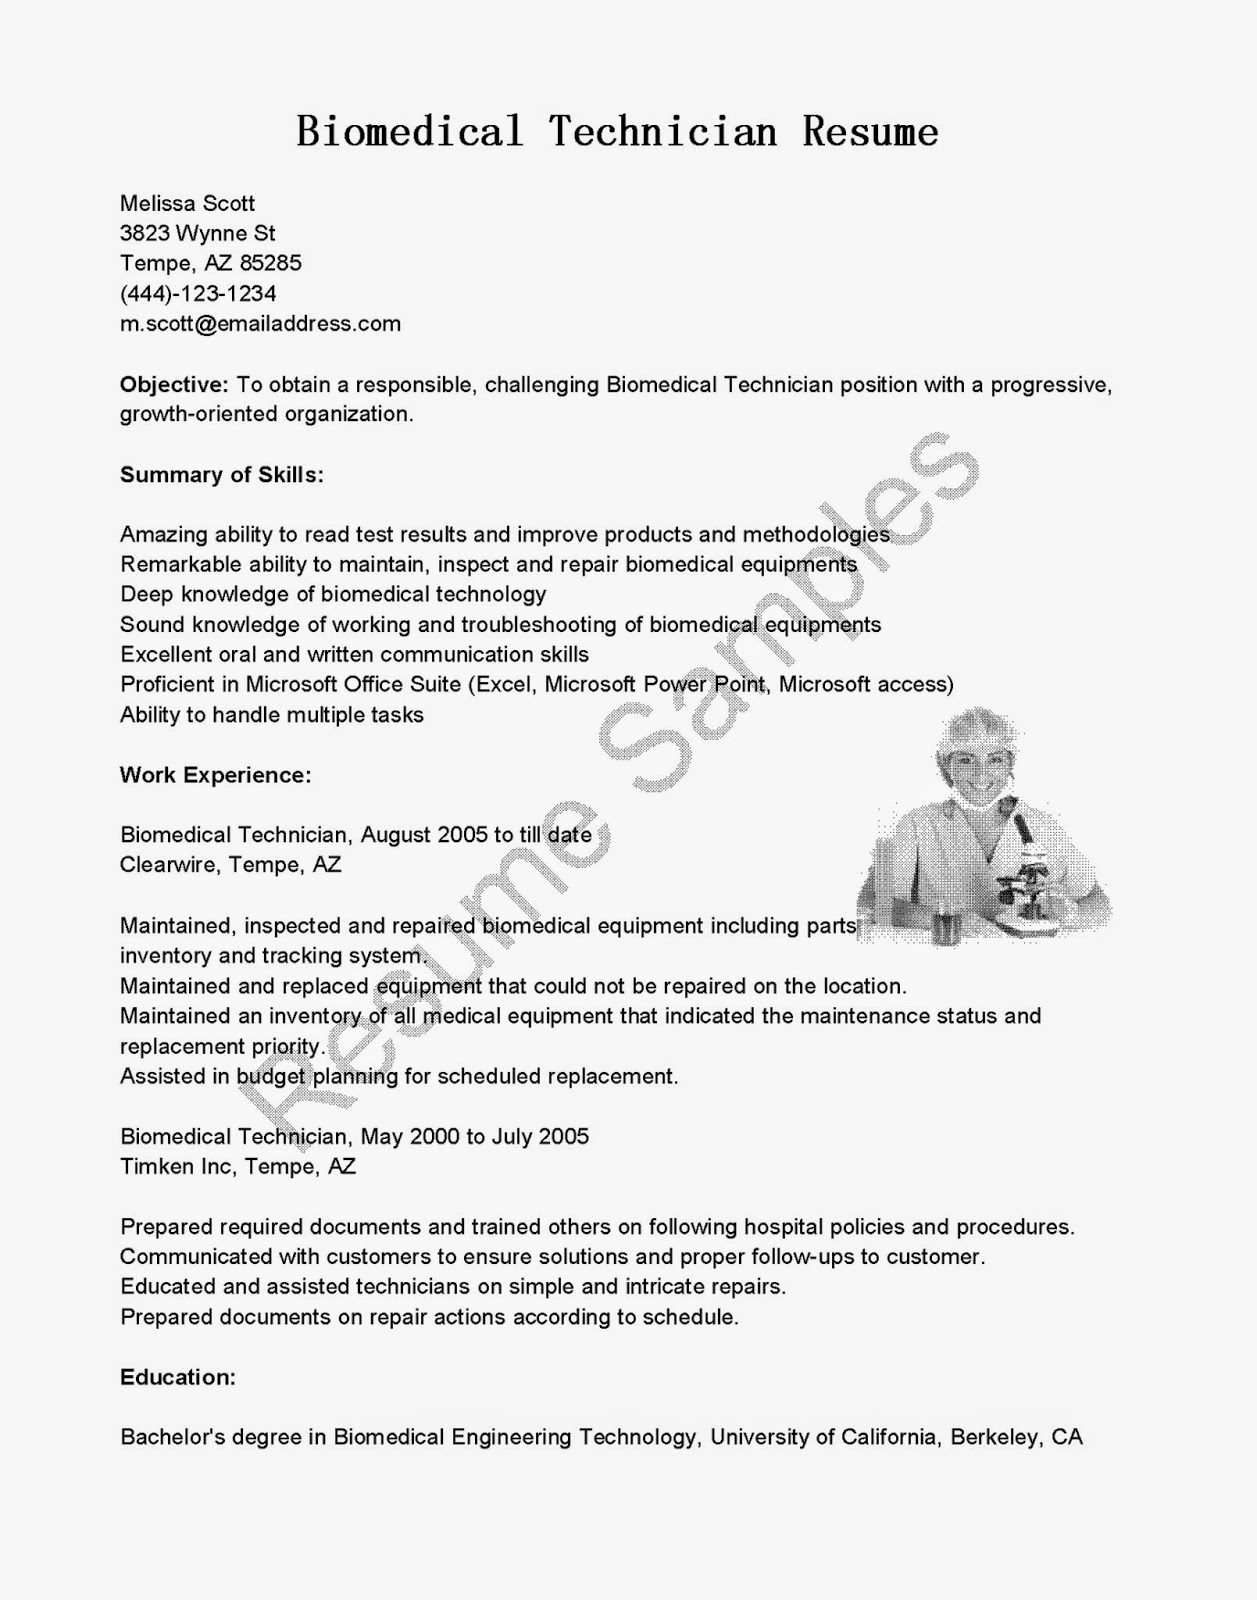 Telecommunications field technician resume